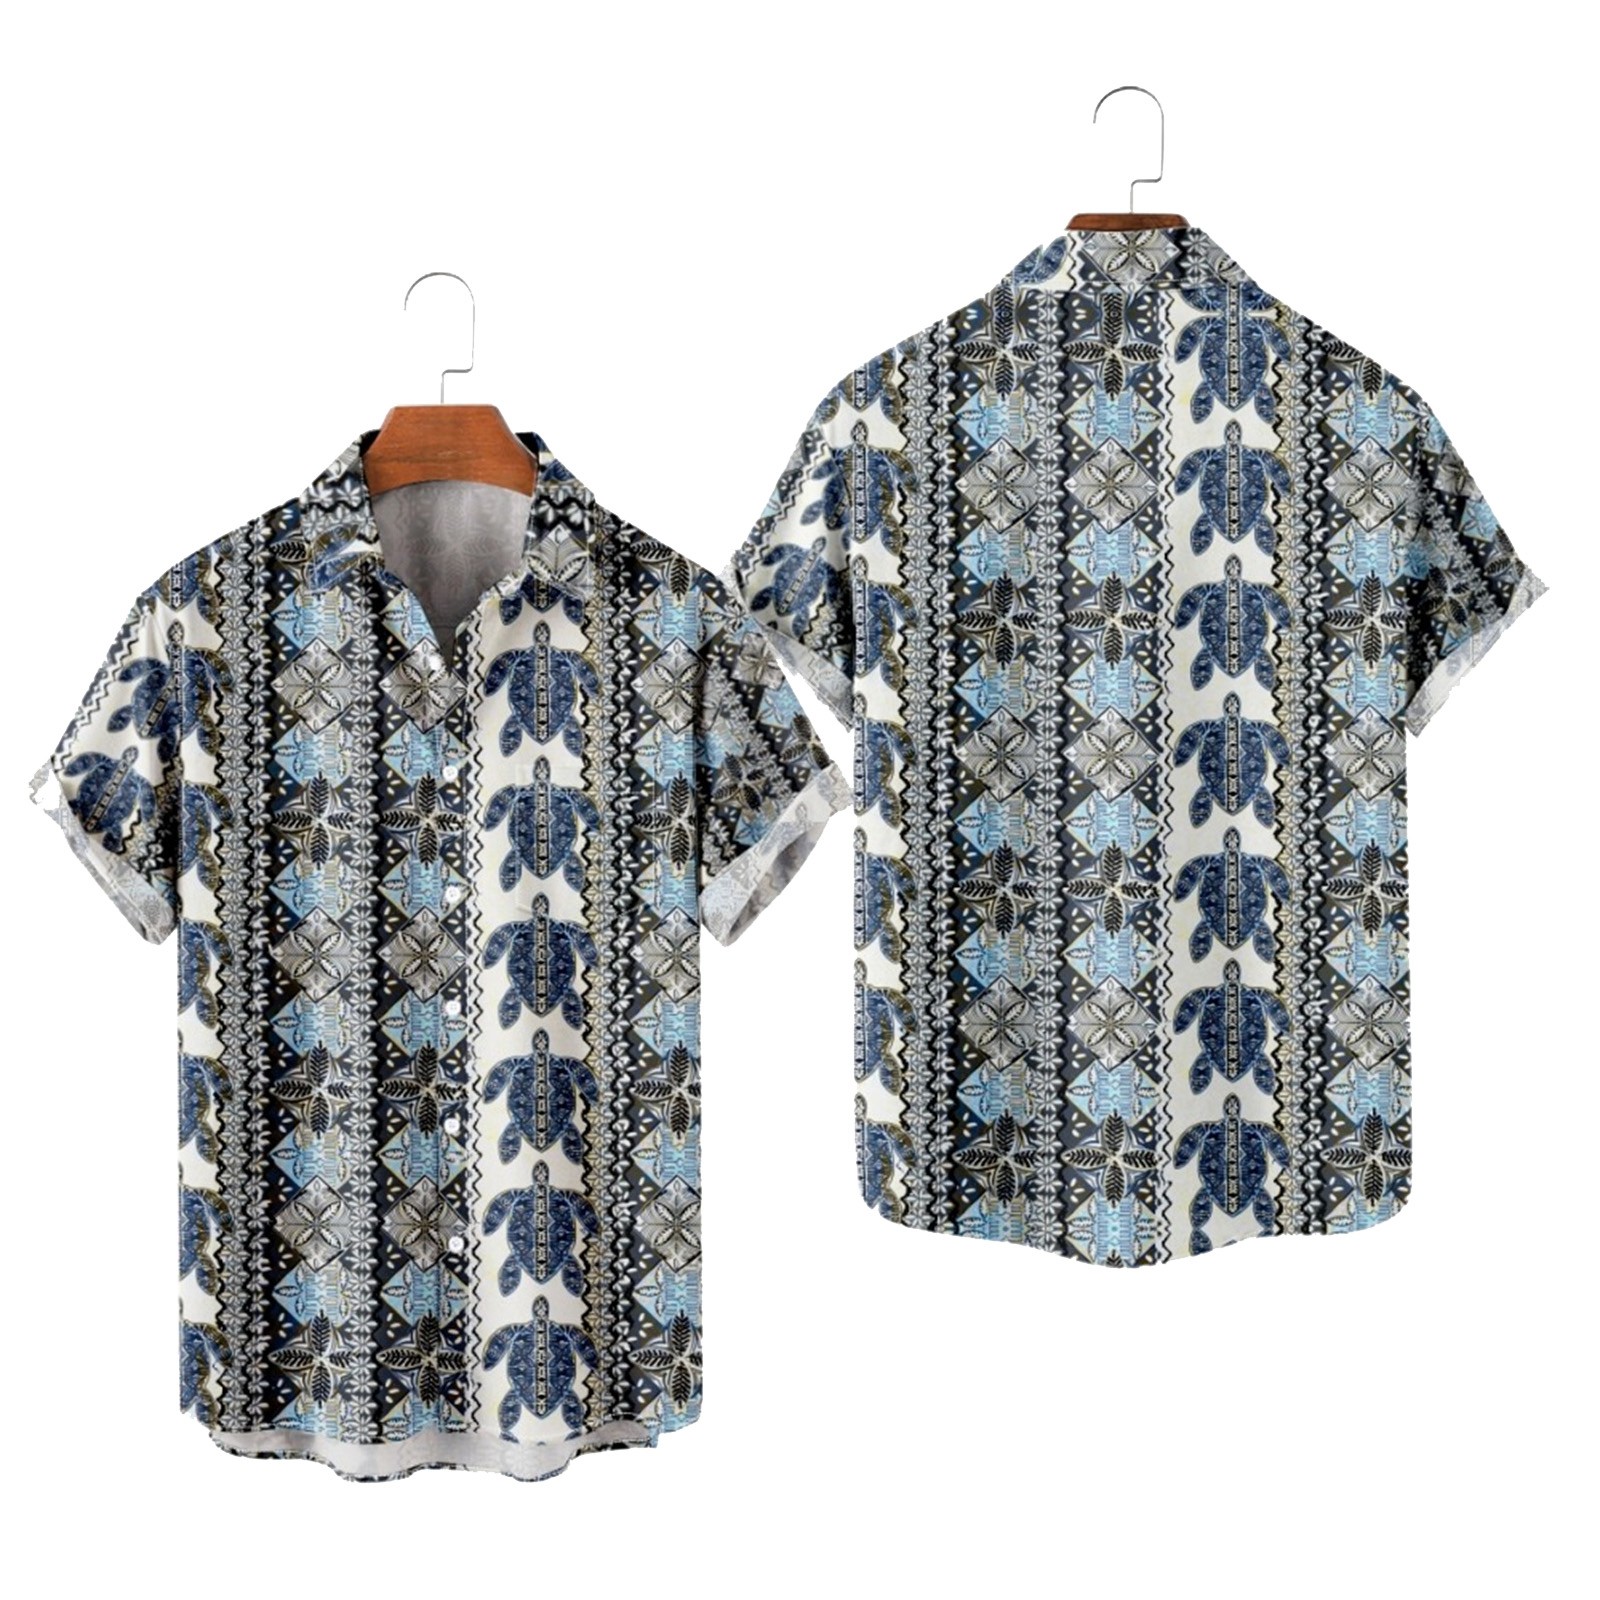 Hawaiian Shirt For Men Funny Mens Short Sleeve Button Down Shirts 3X1 Sea Turtle Hawaiian Beach Shirts Forjpeg